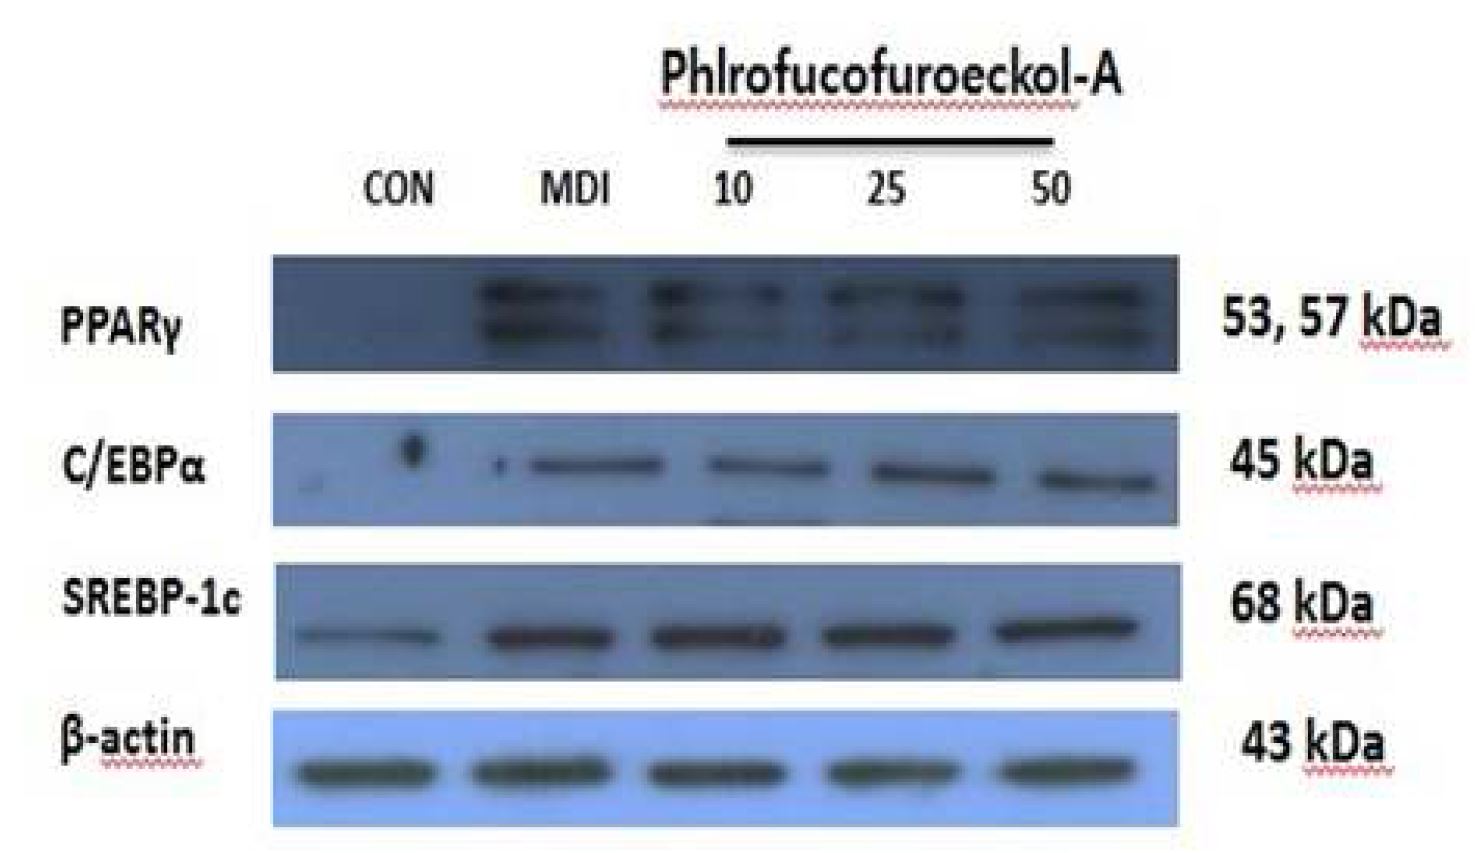 Fig. 20 phlorofuroeckil-A 의 비만 관련 단백질 발현양상 밴드 외관